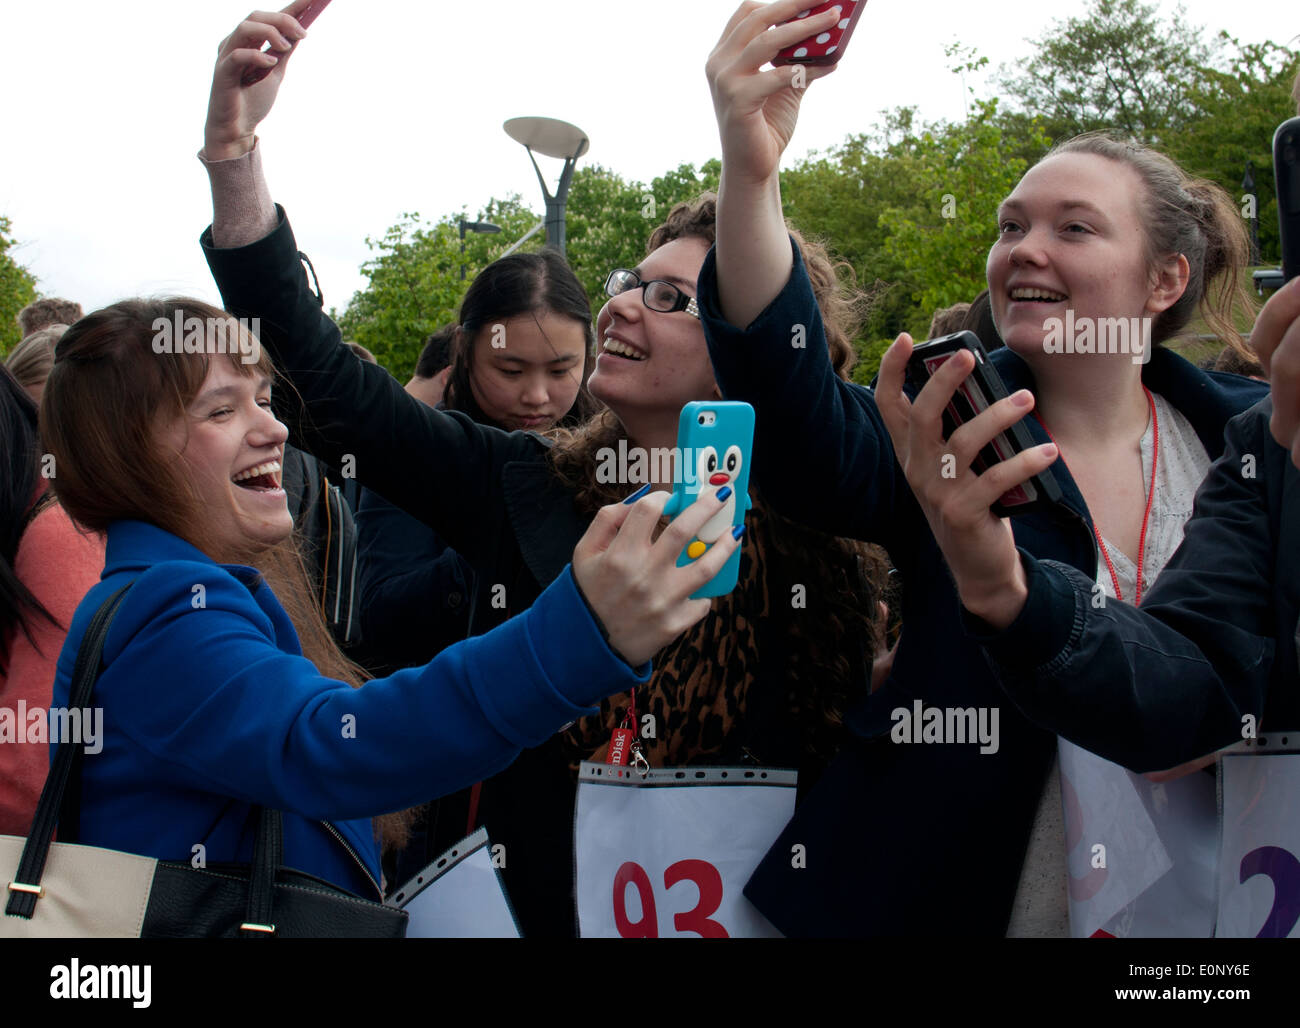 Students taking selfies Stock Photo